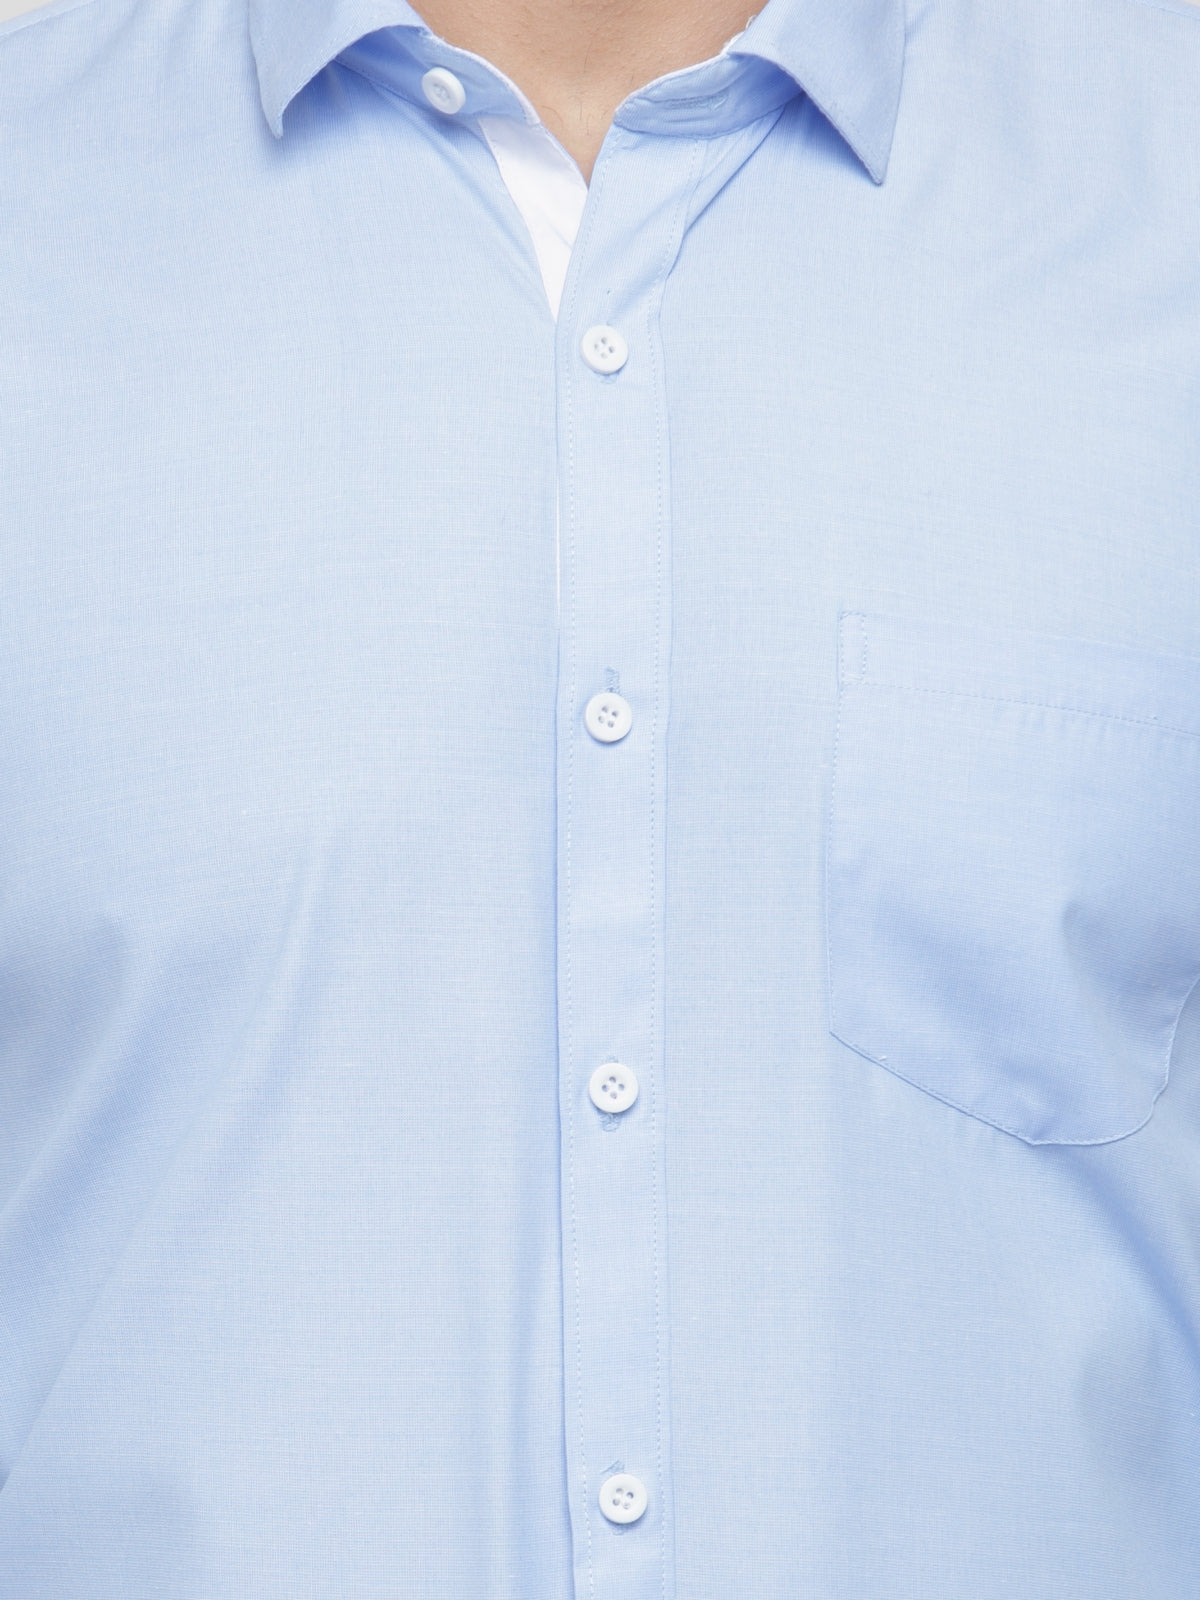 Men's Blue Formal Shirt with white detailing ( SF 419Blue ) - Jainish